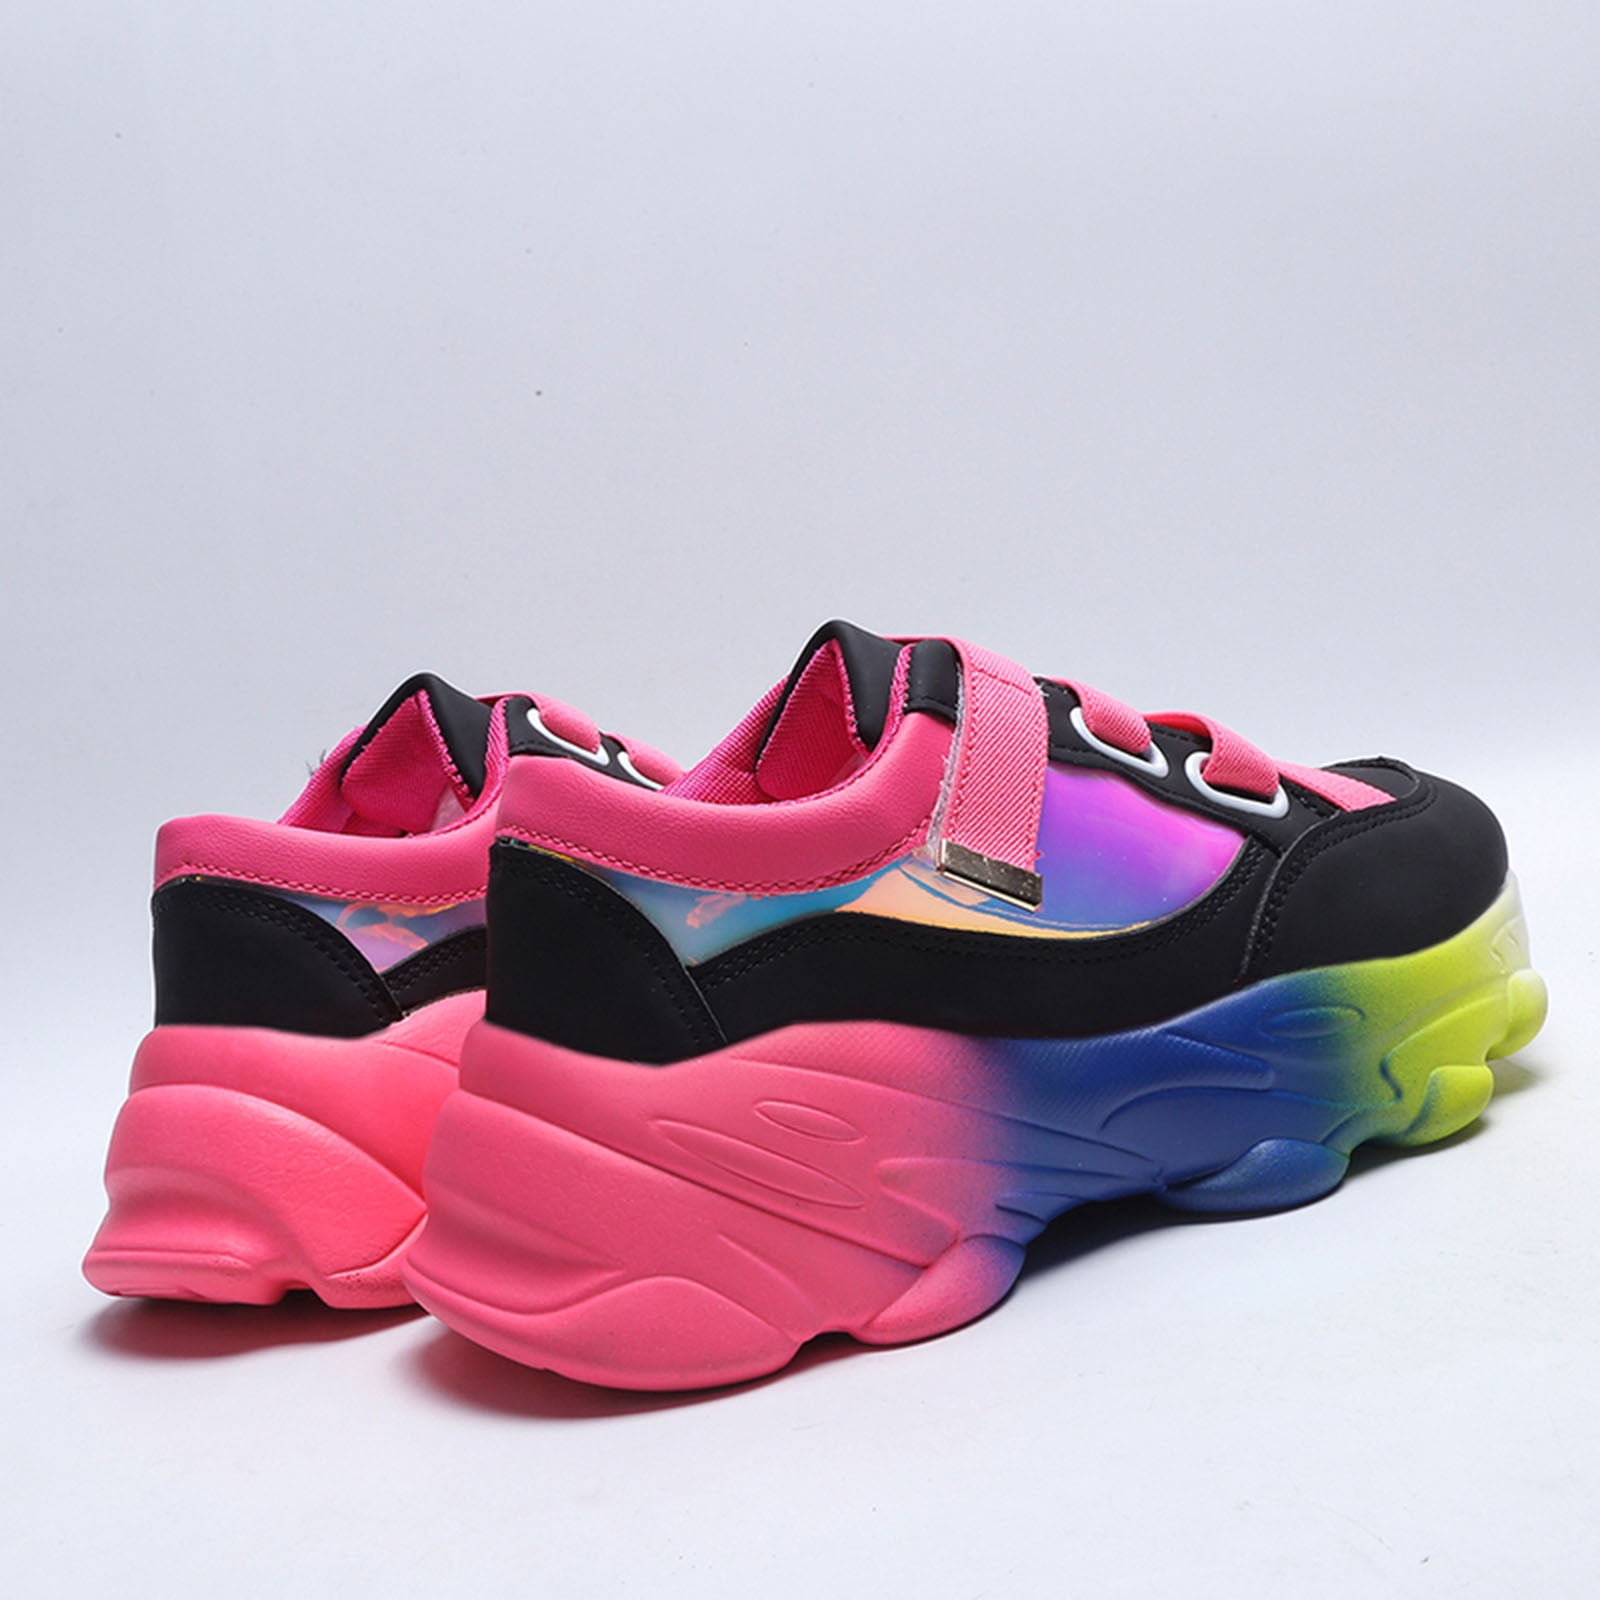 FINAL SALE - Phoebe Color Block Sneakers | Trendy sneakers, Color block,  Faux suede